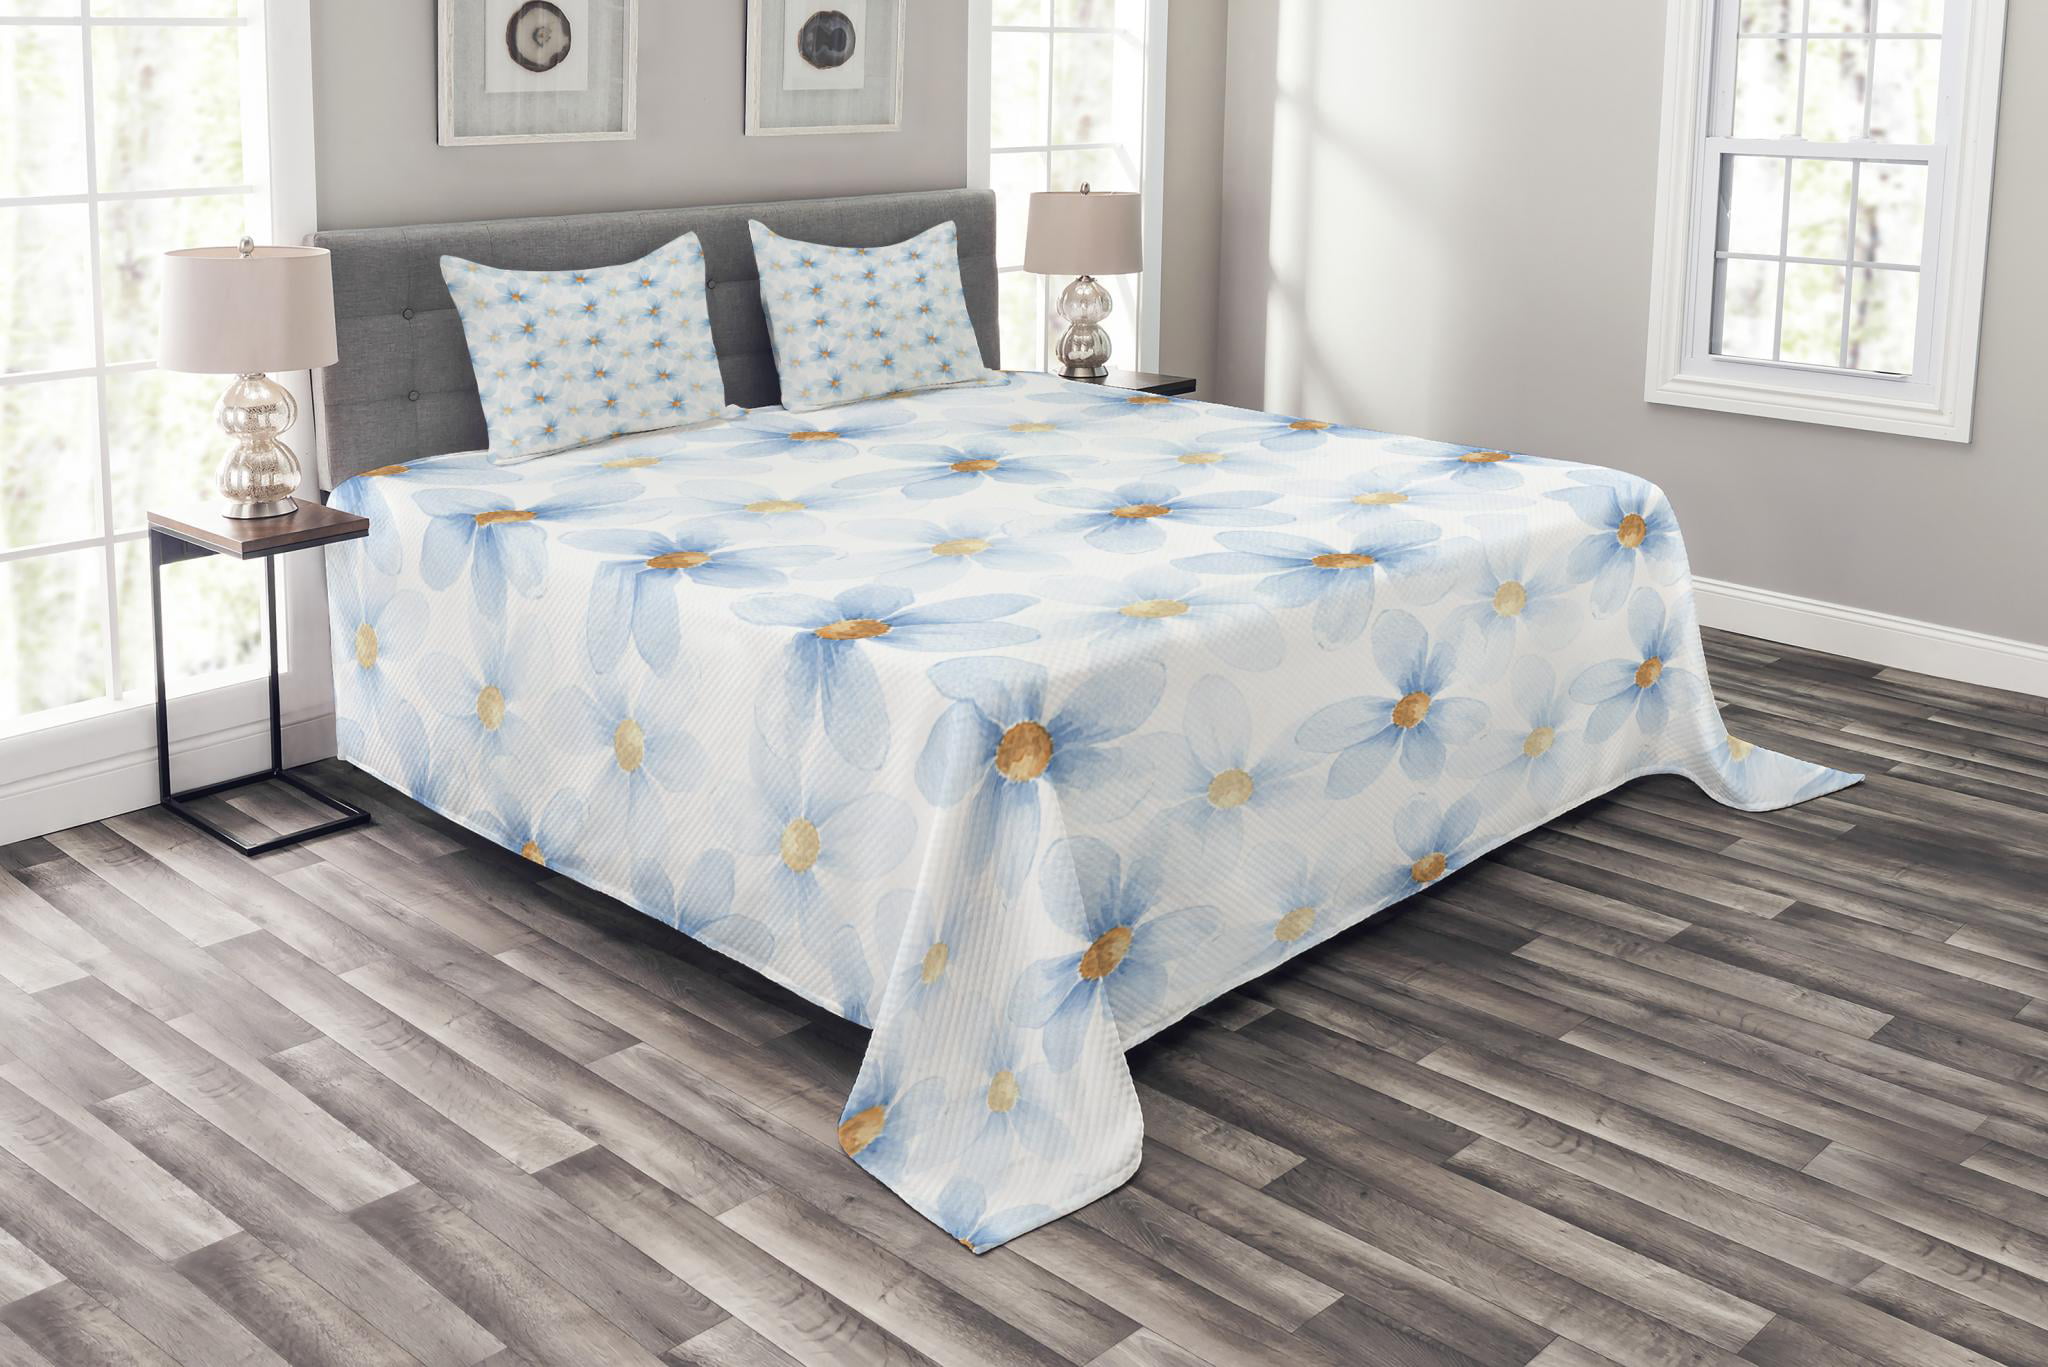 Details about   Floral Quilted Bedspread & Pillow Shams Set Iris Fresh Colors Print 